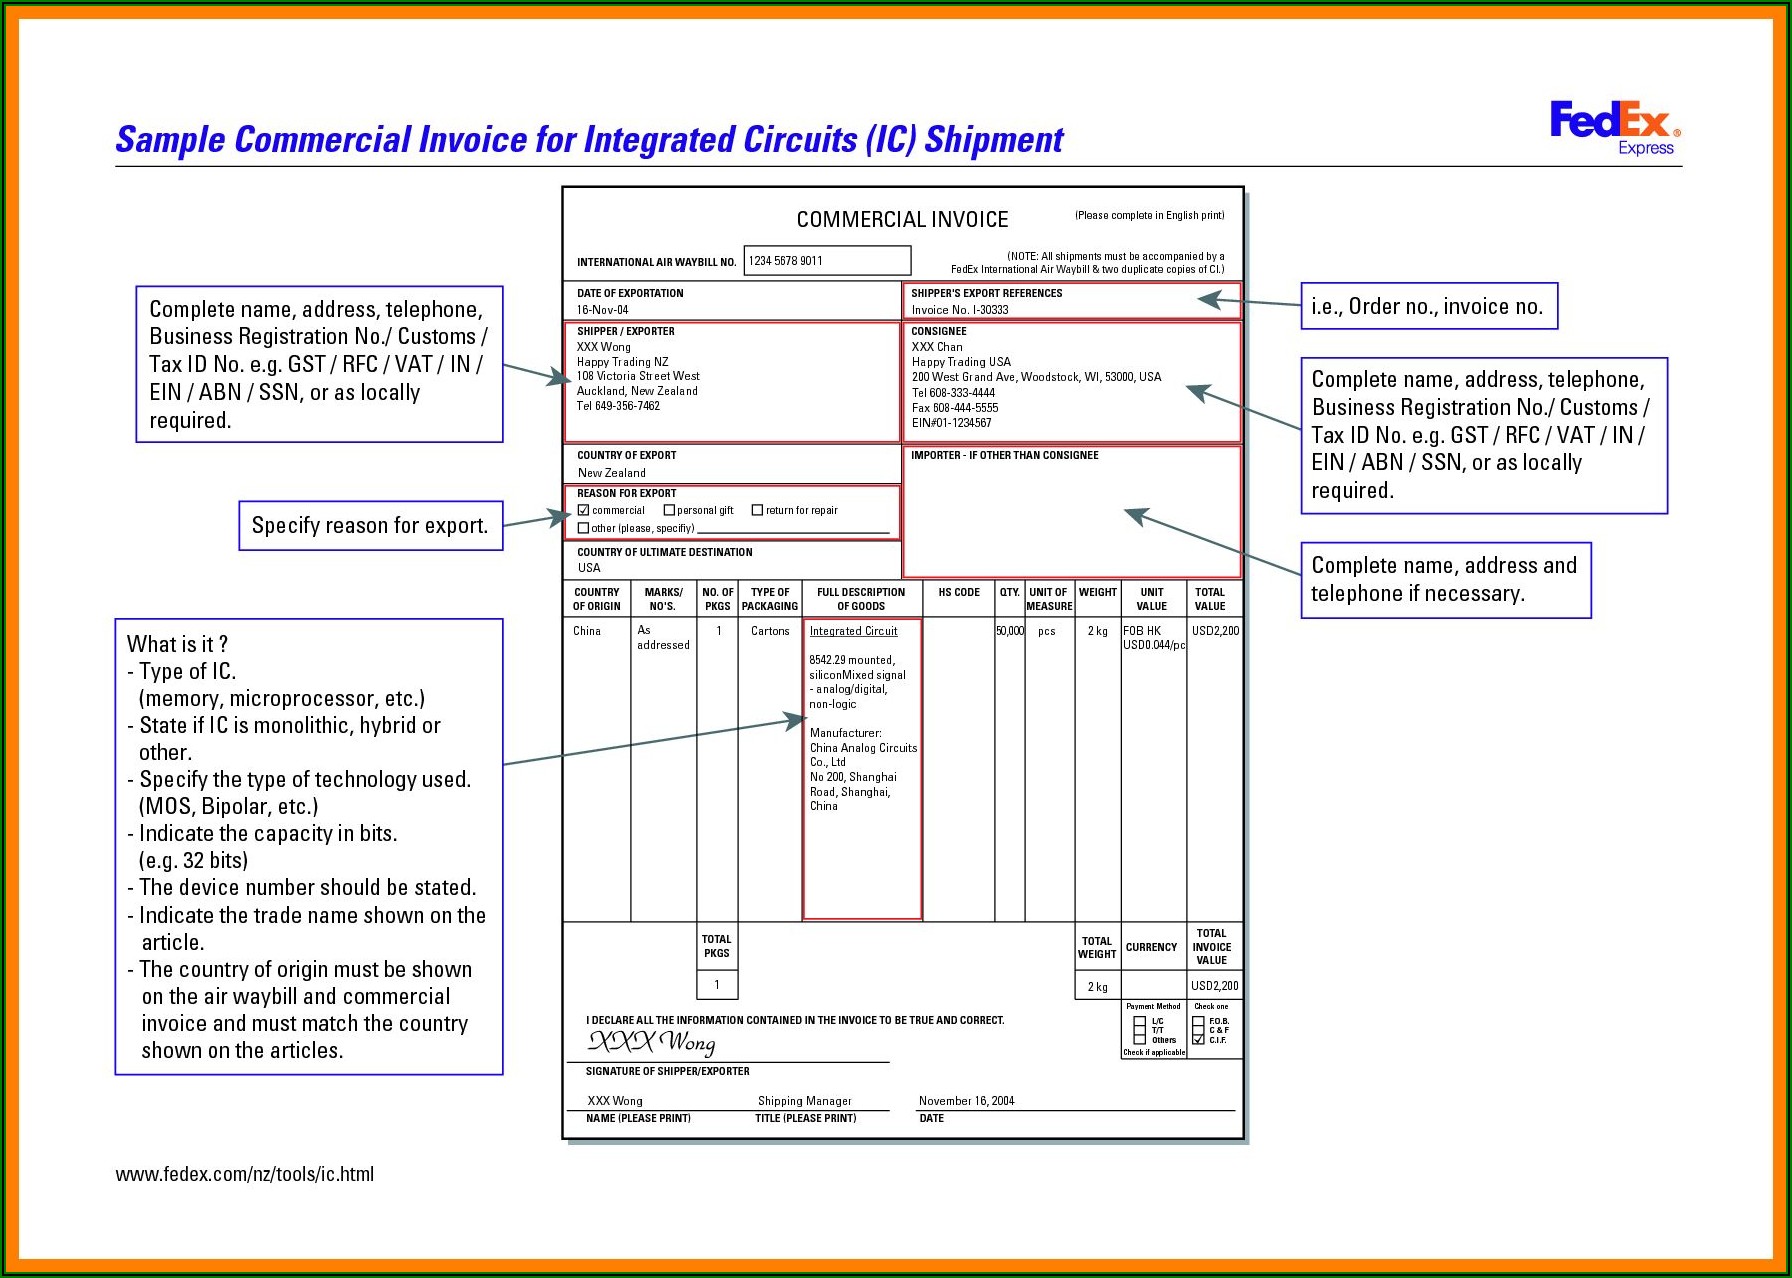 Fedex International Commercial Invoice Sample